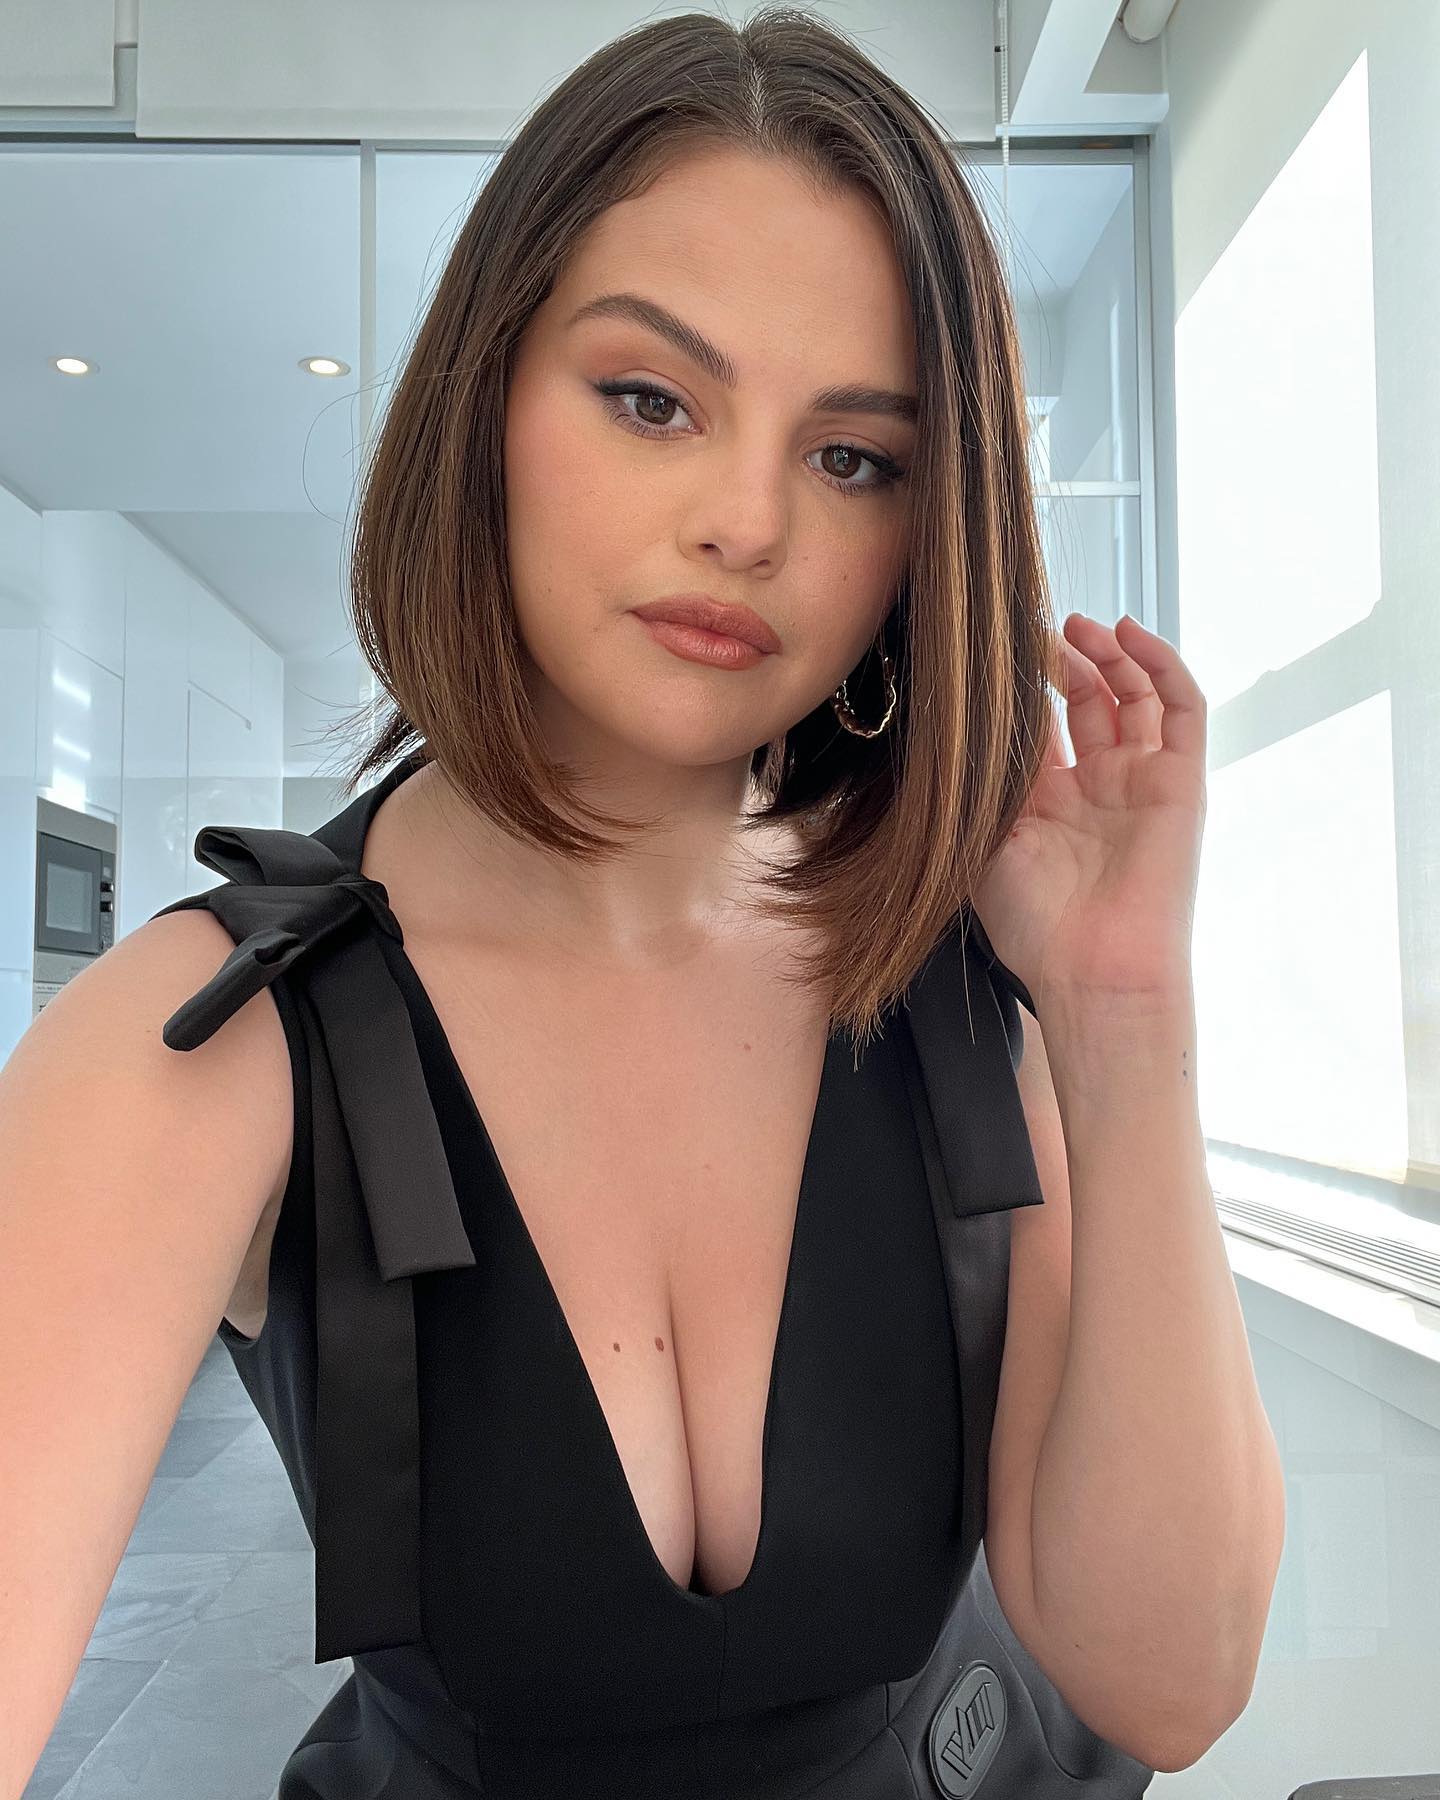 Selena Gomez Tits - Selena Gomez Braless: Photos of the Singer Not Wearing a Bra